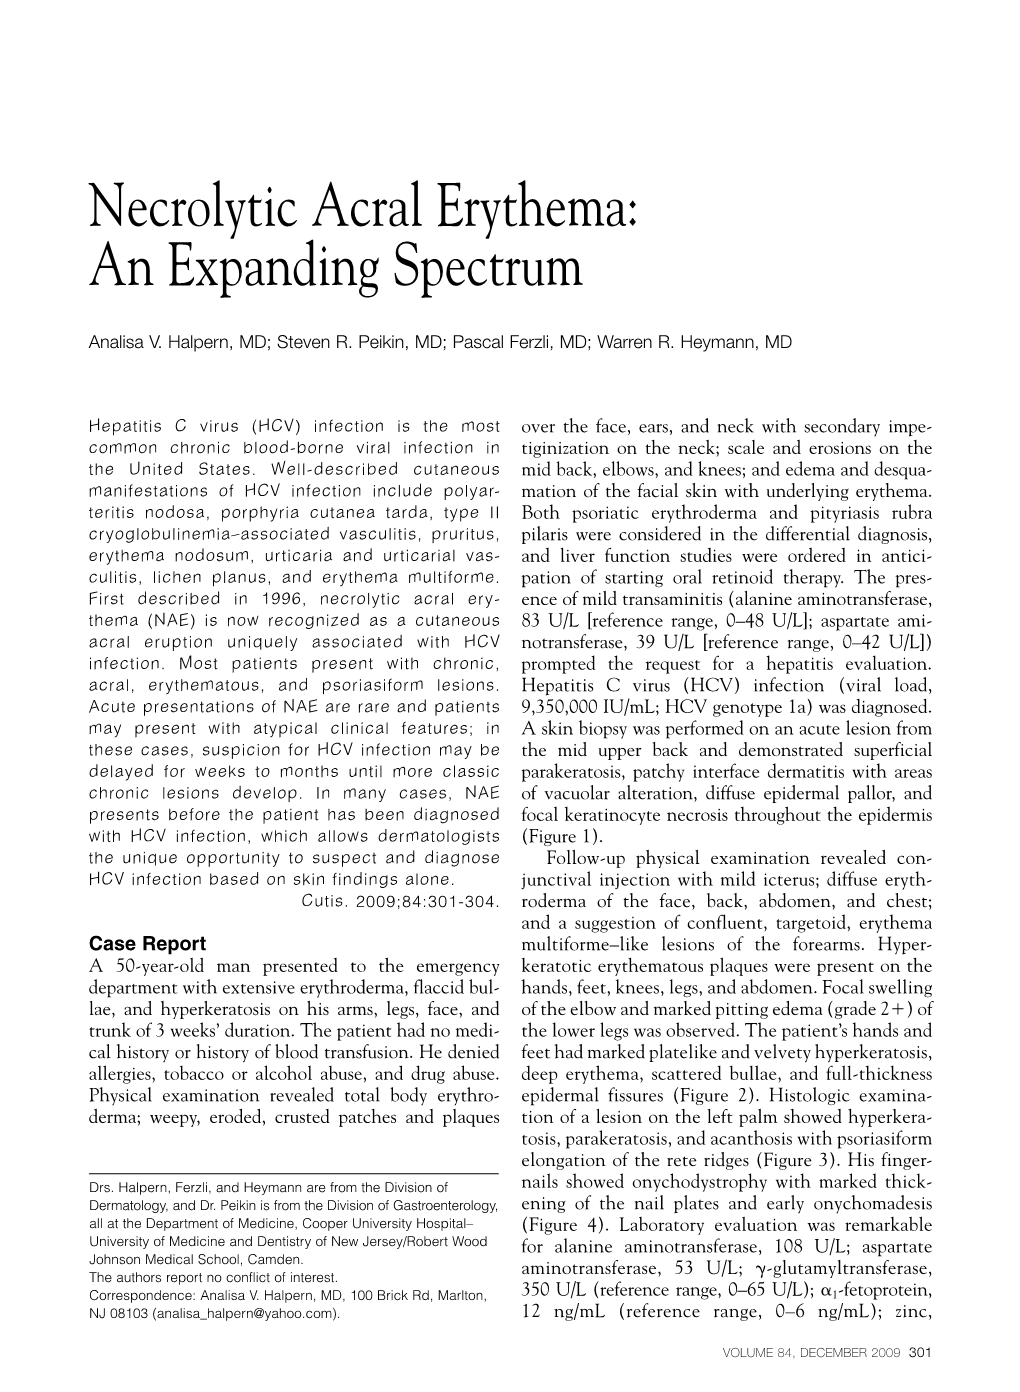 Necrolytic Acral Erythema: an Expanding Spectrum